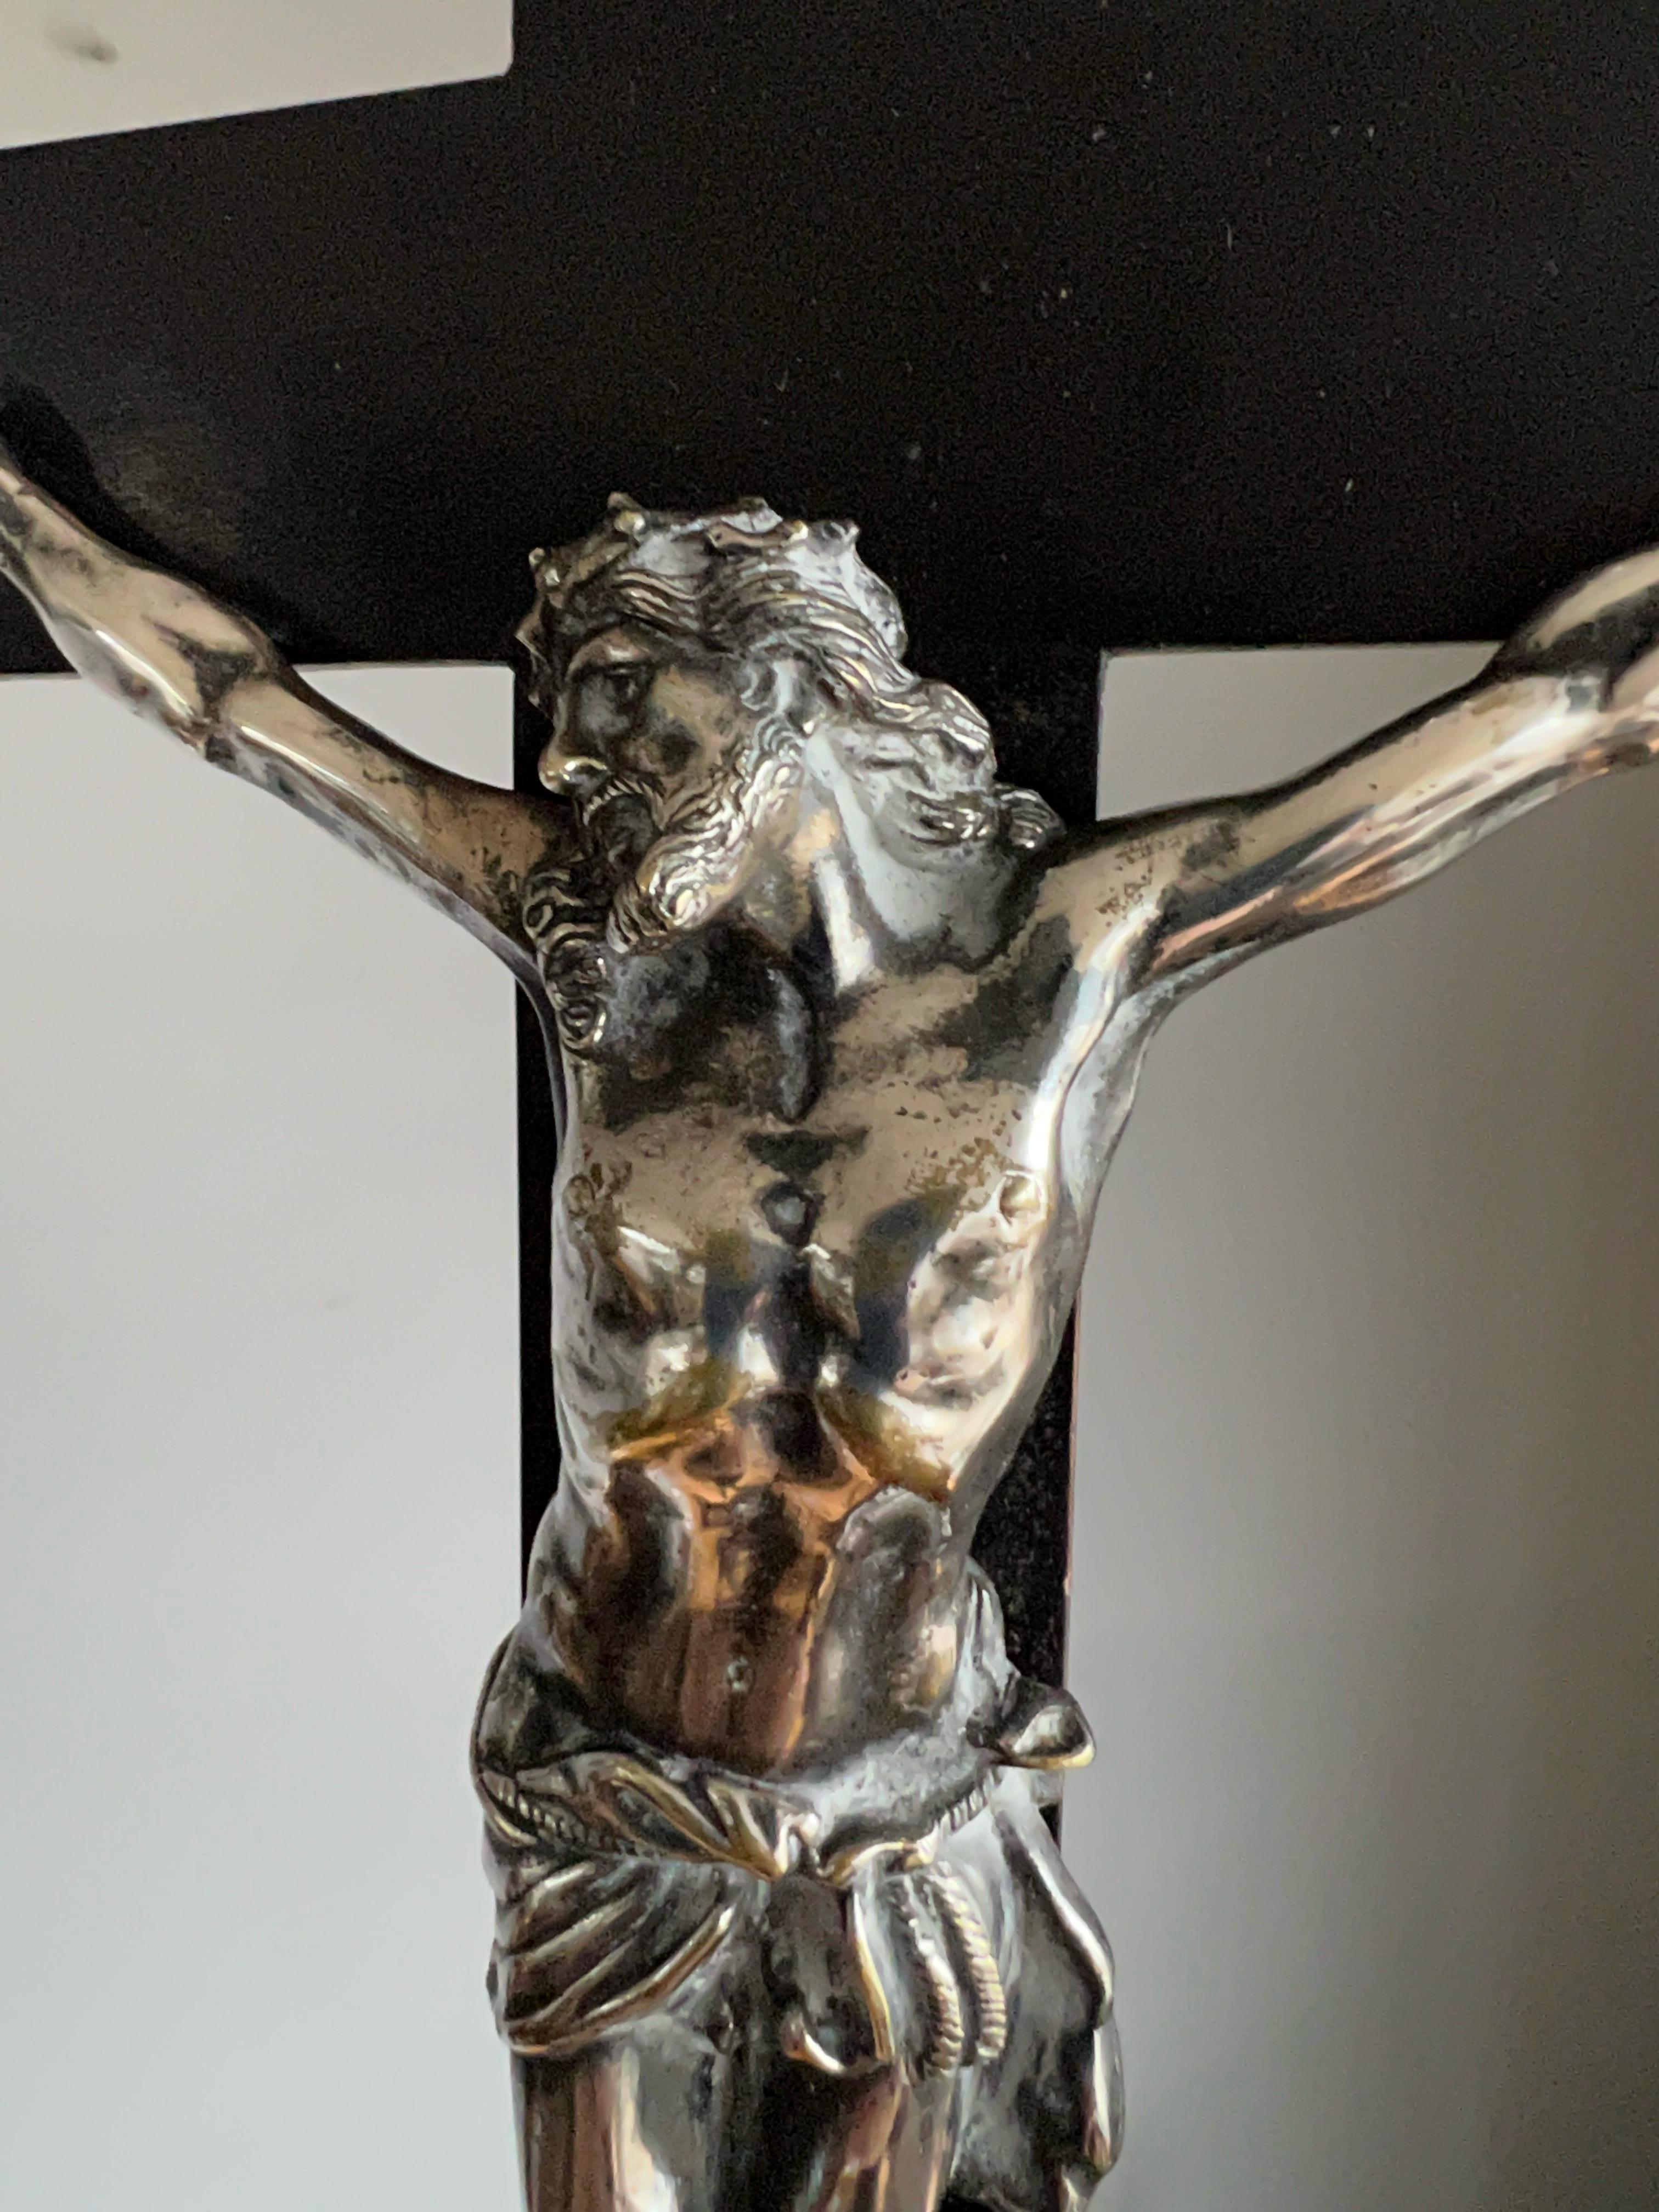 skull and crossbones on crucifix